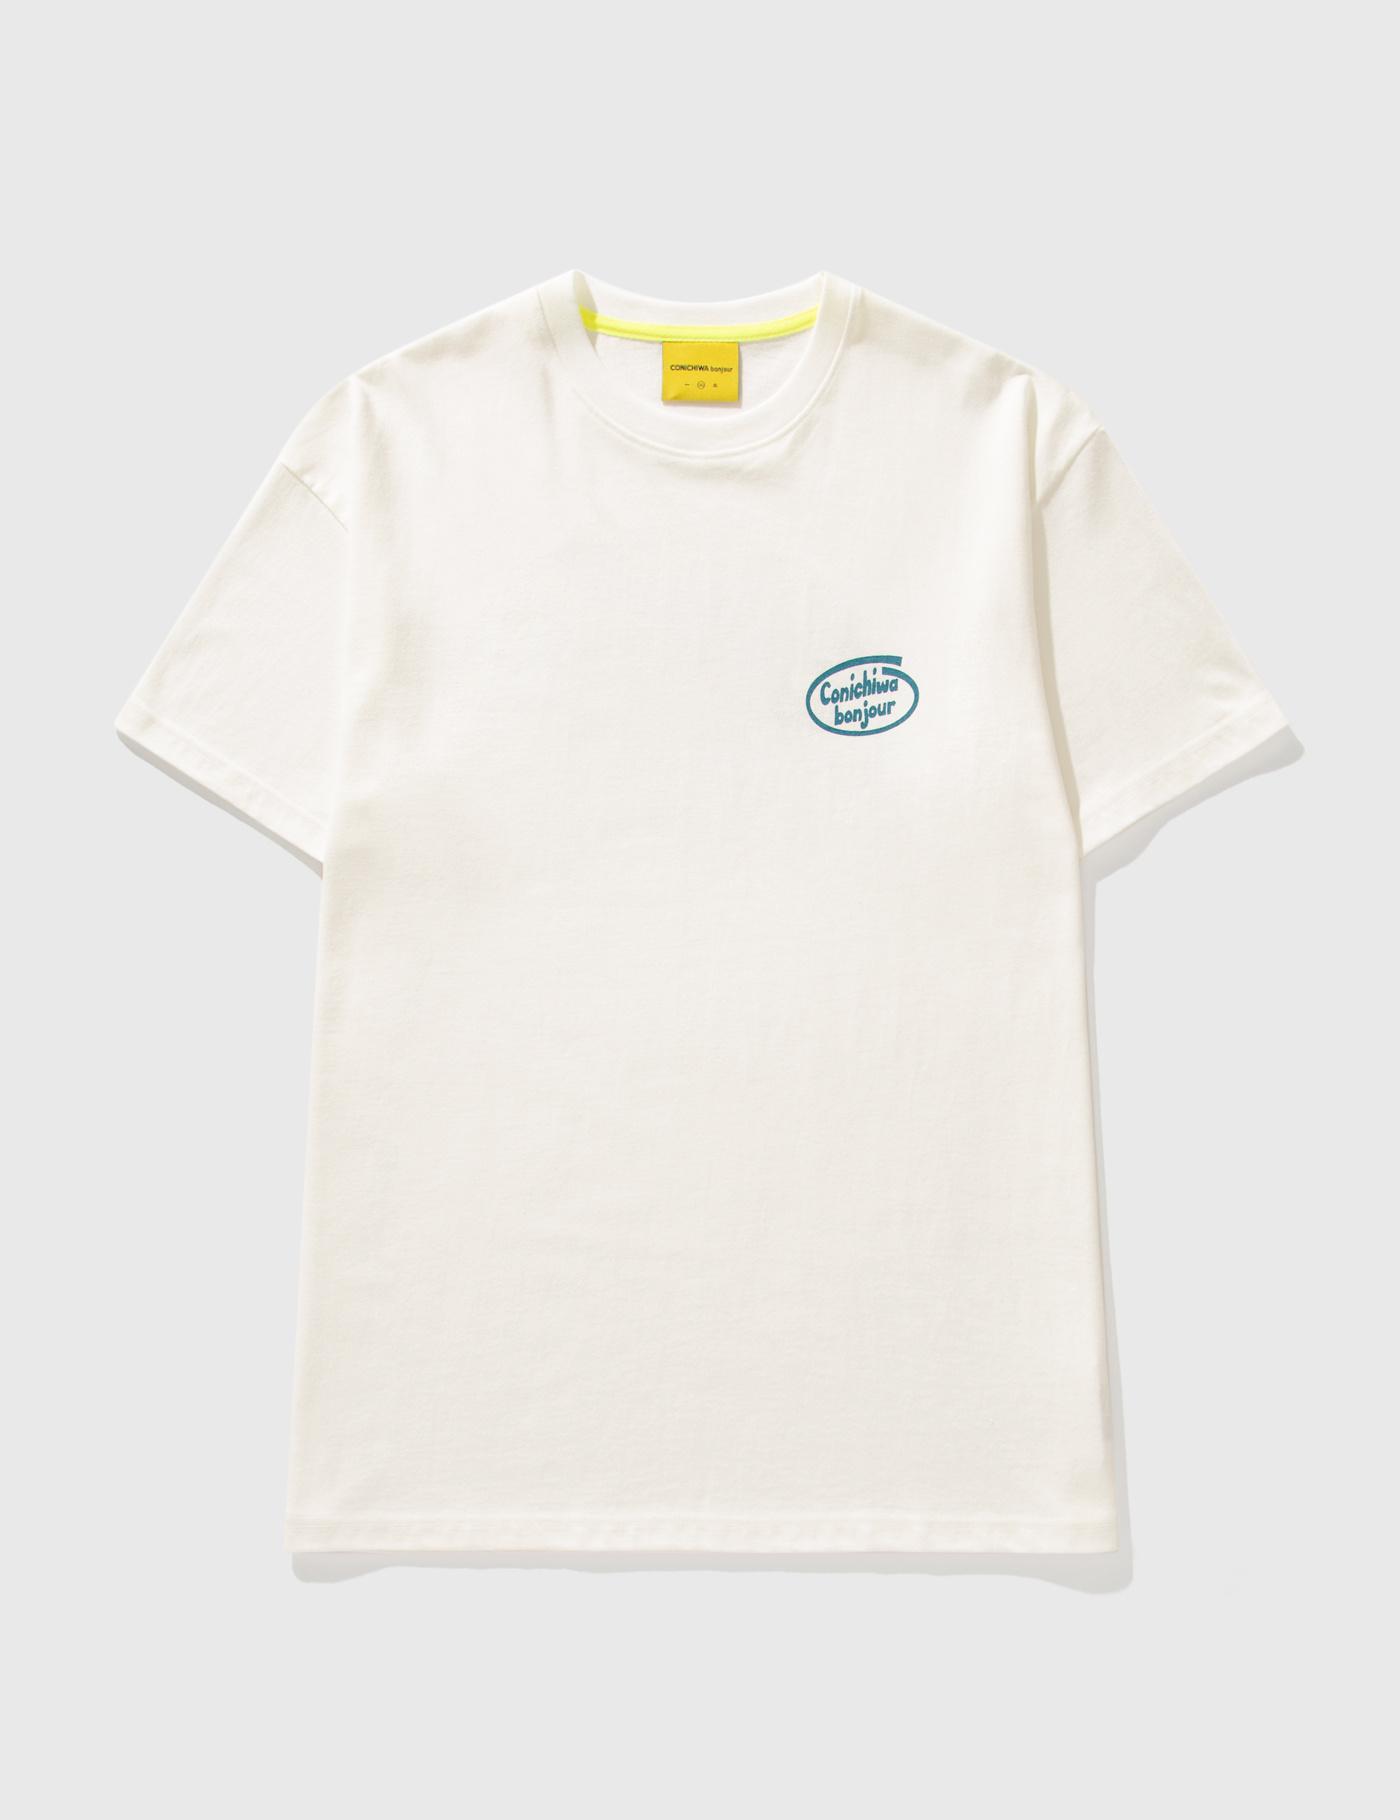 CB Soft T-shirt by CONICHIWA BONJOUR